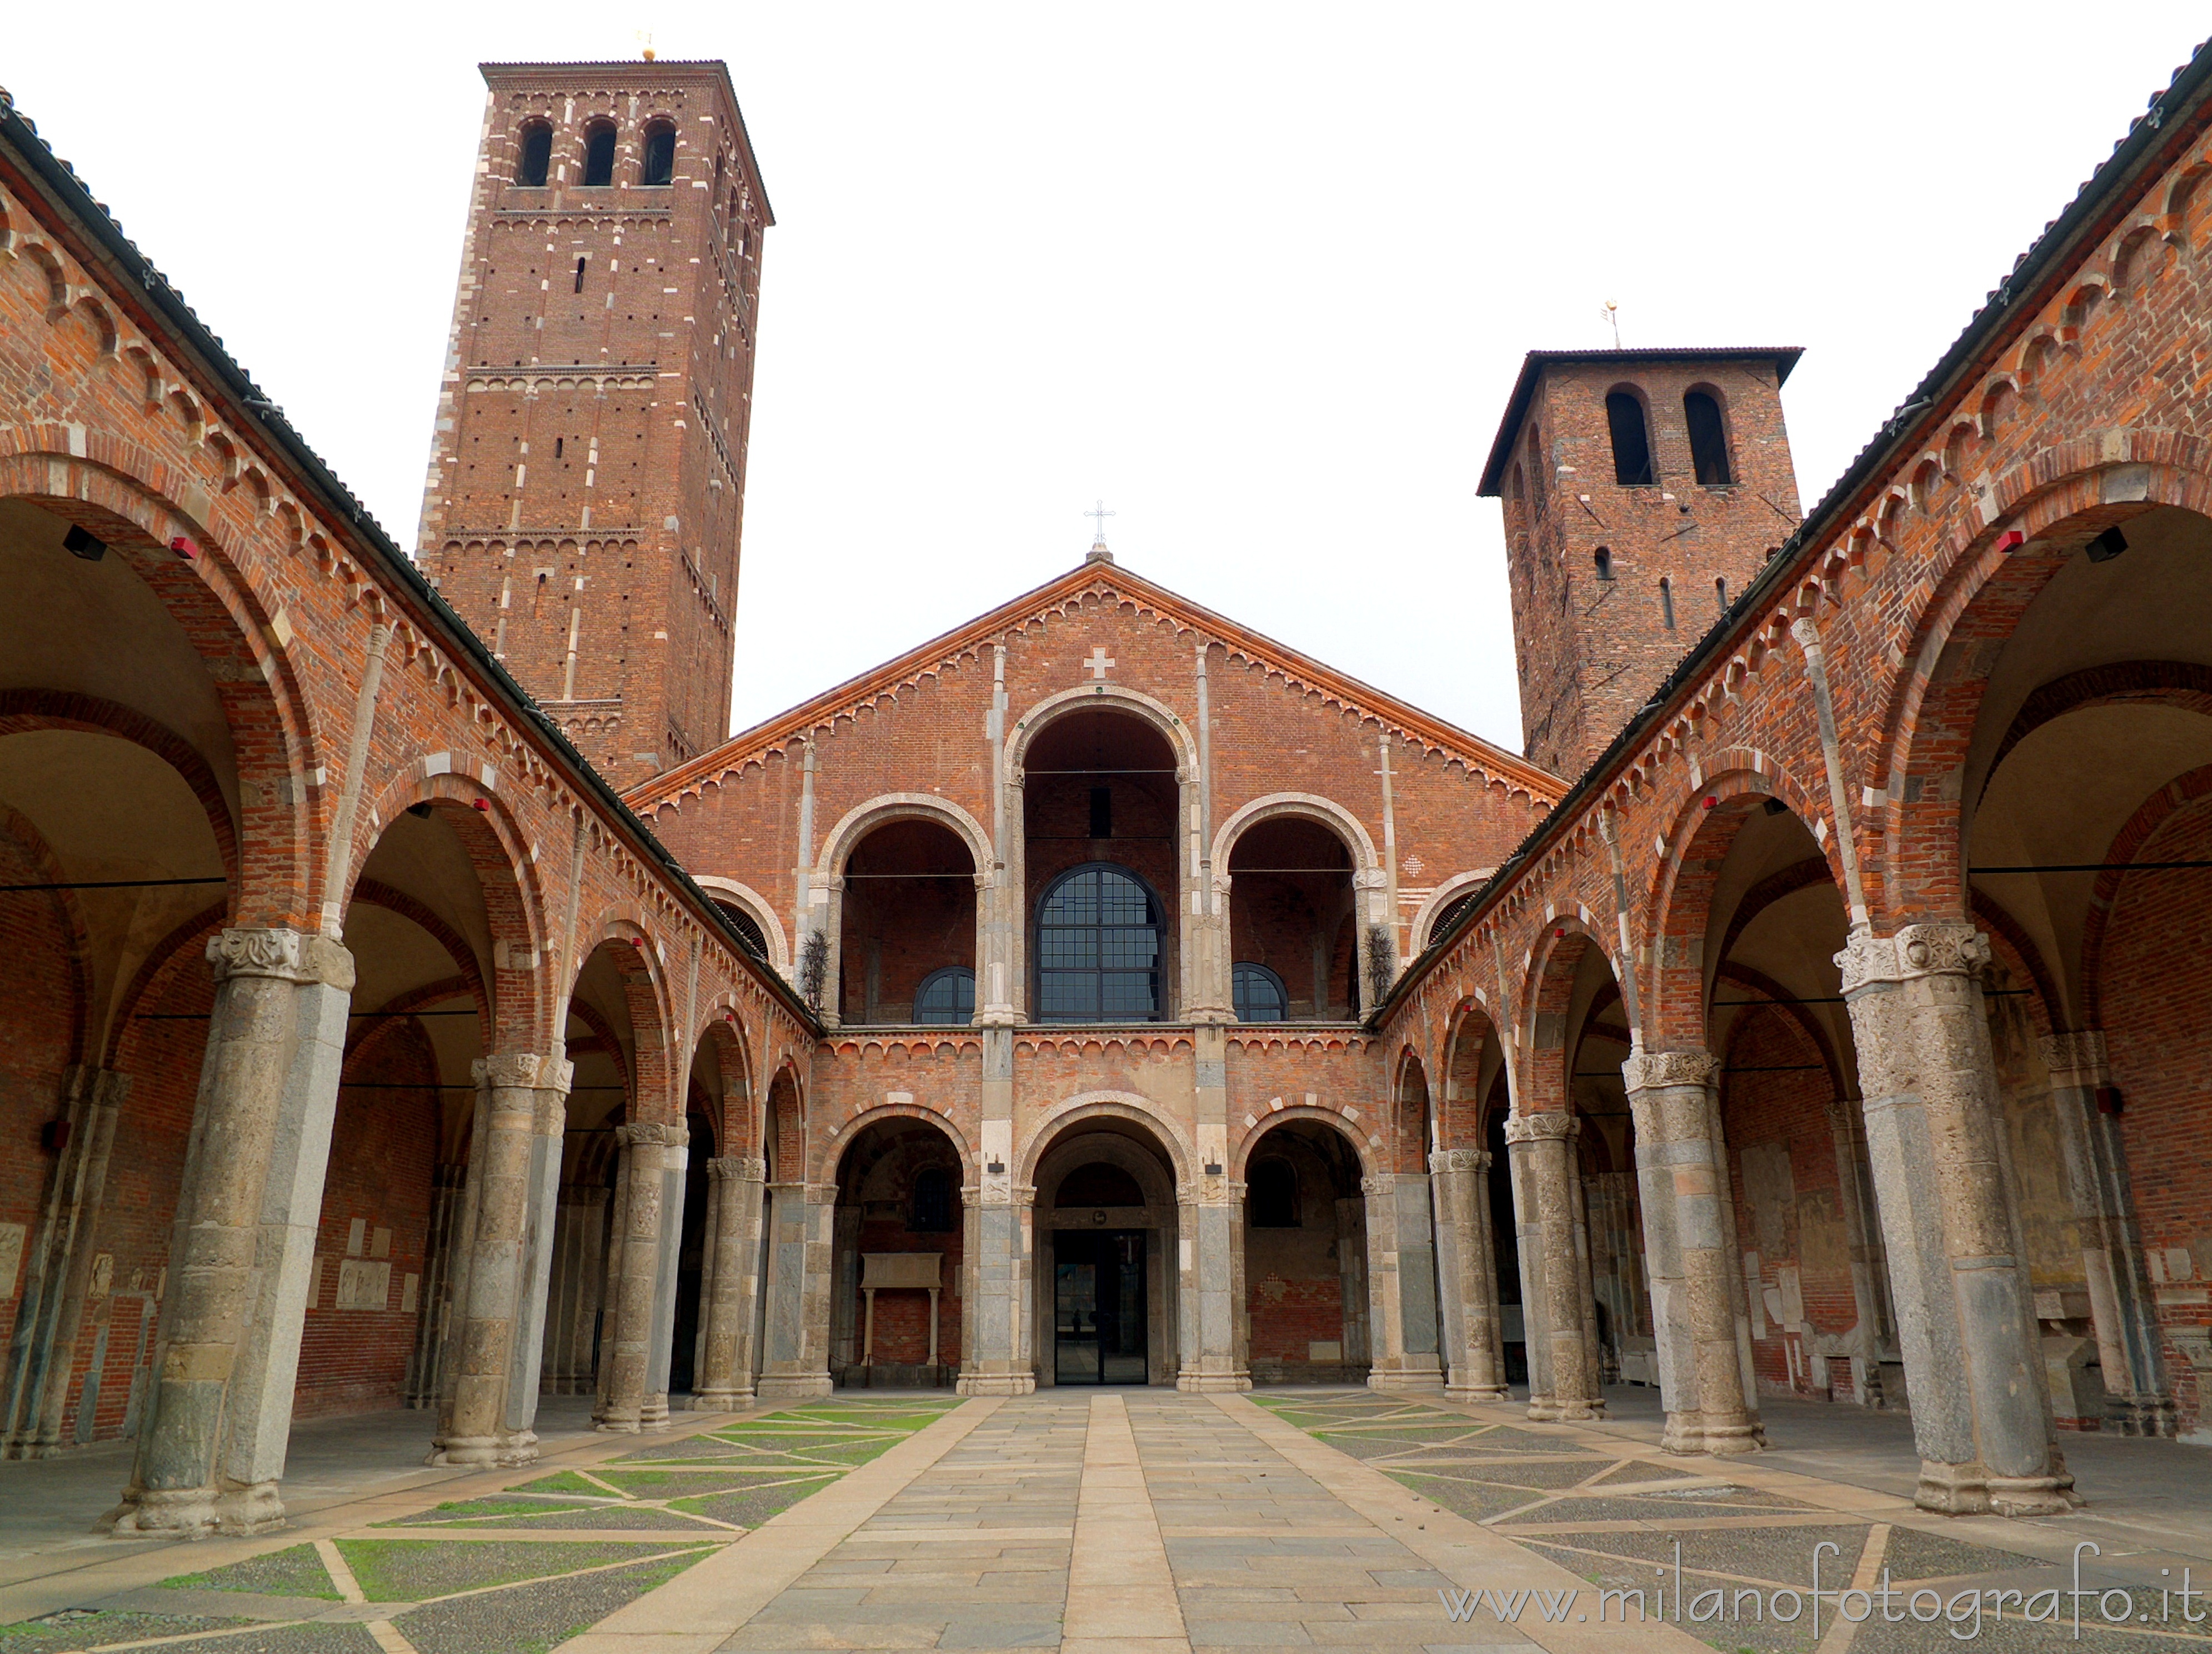 Milan (Italy): Portico of the Basilica of Sant'Ambrogio - Milan (Italy)